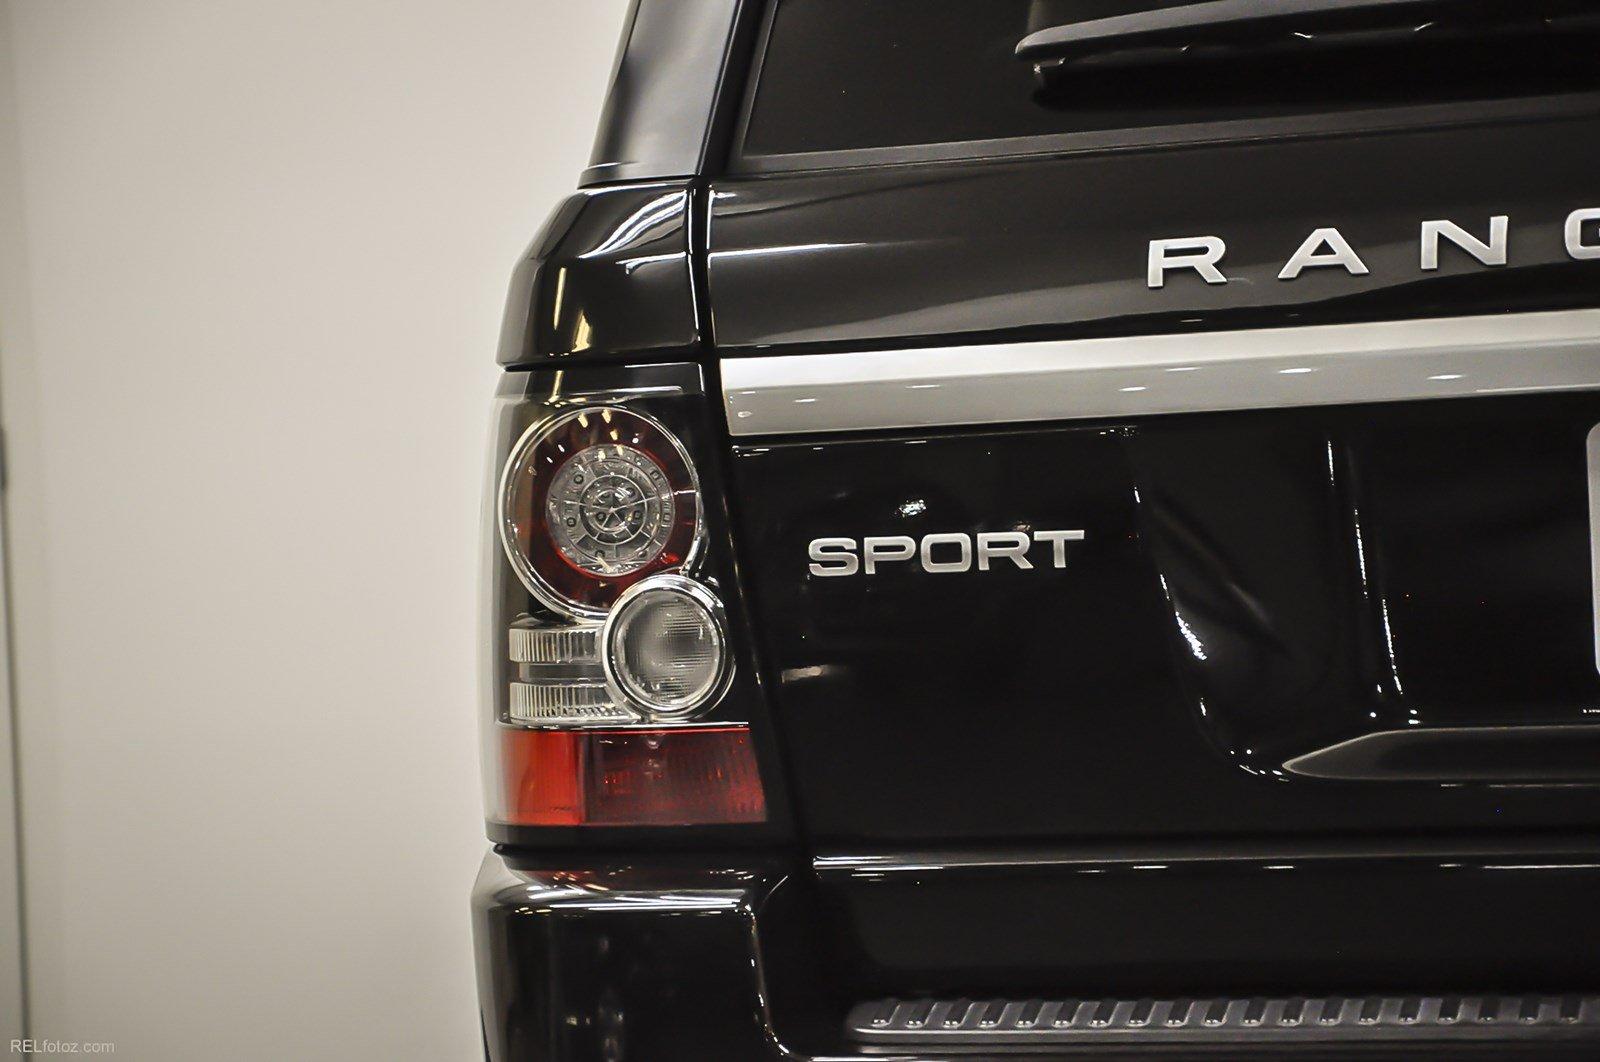 Used 2013 Land Rover Range Rover Sport HSE for sale Sold at Gravity Autos Marietta in Marietta GA 30060 6